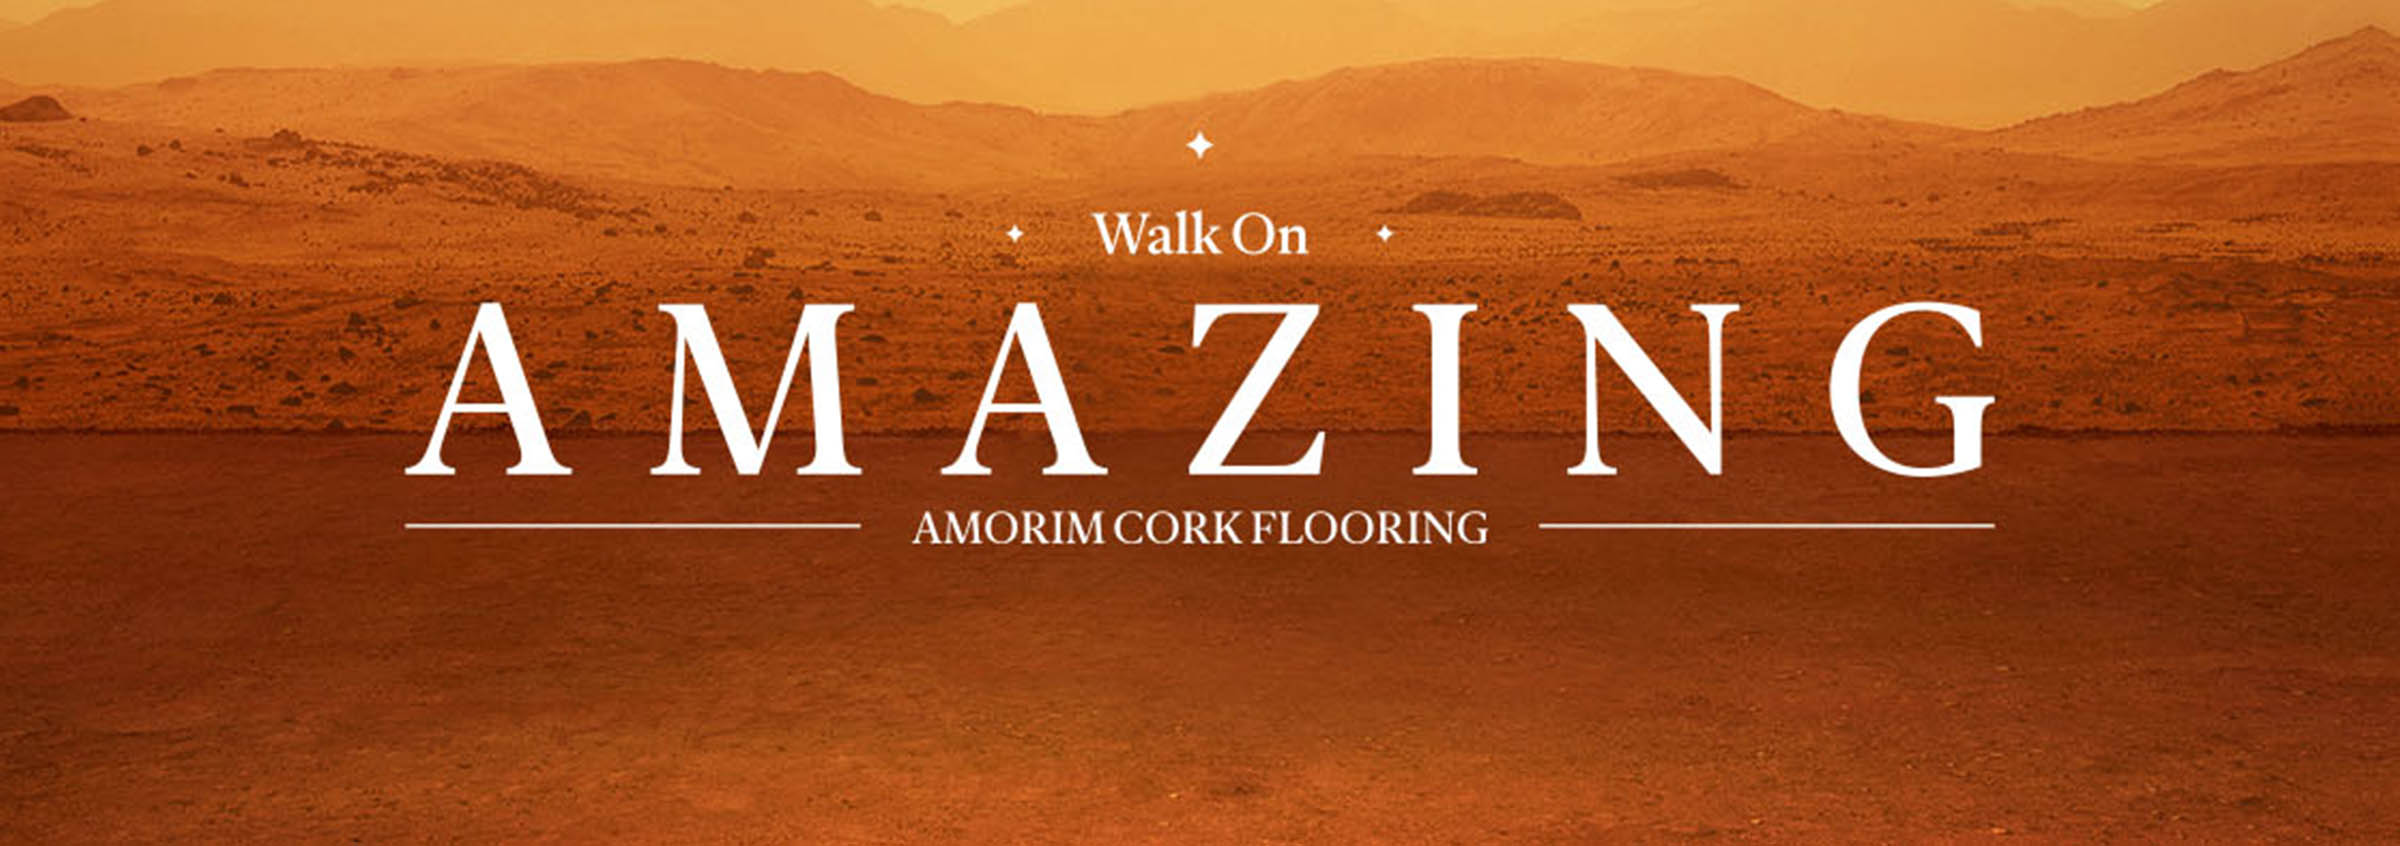 Walk on Amazing: Amorim auf Mars-Mission